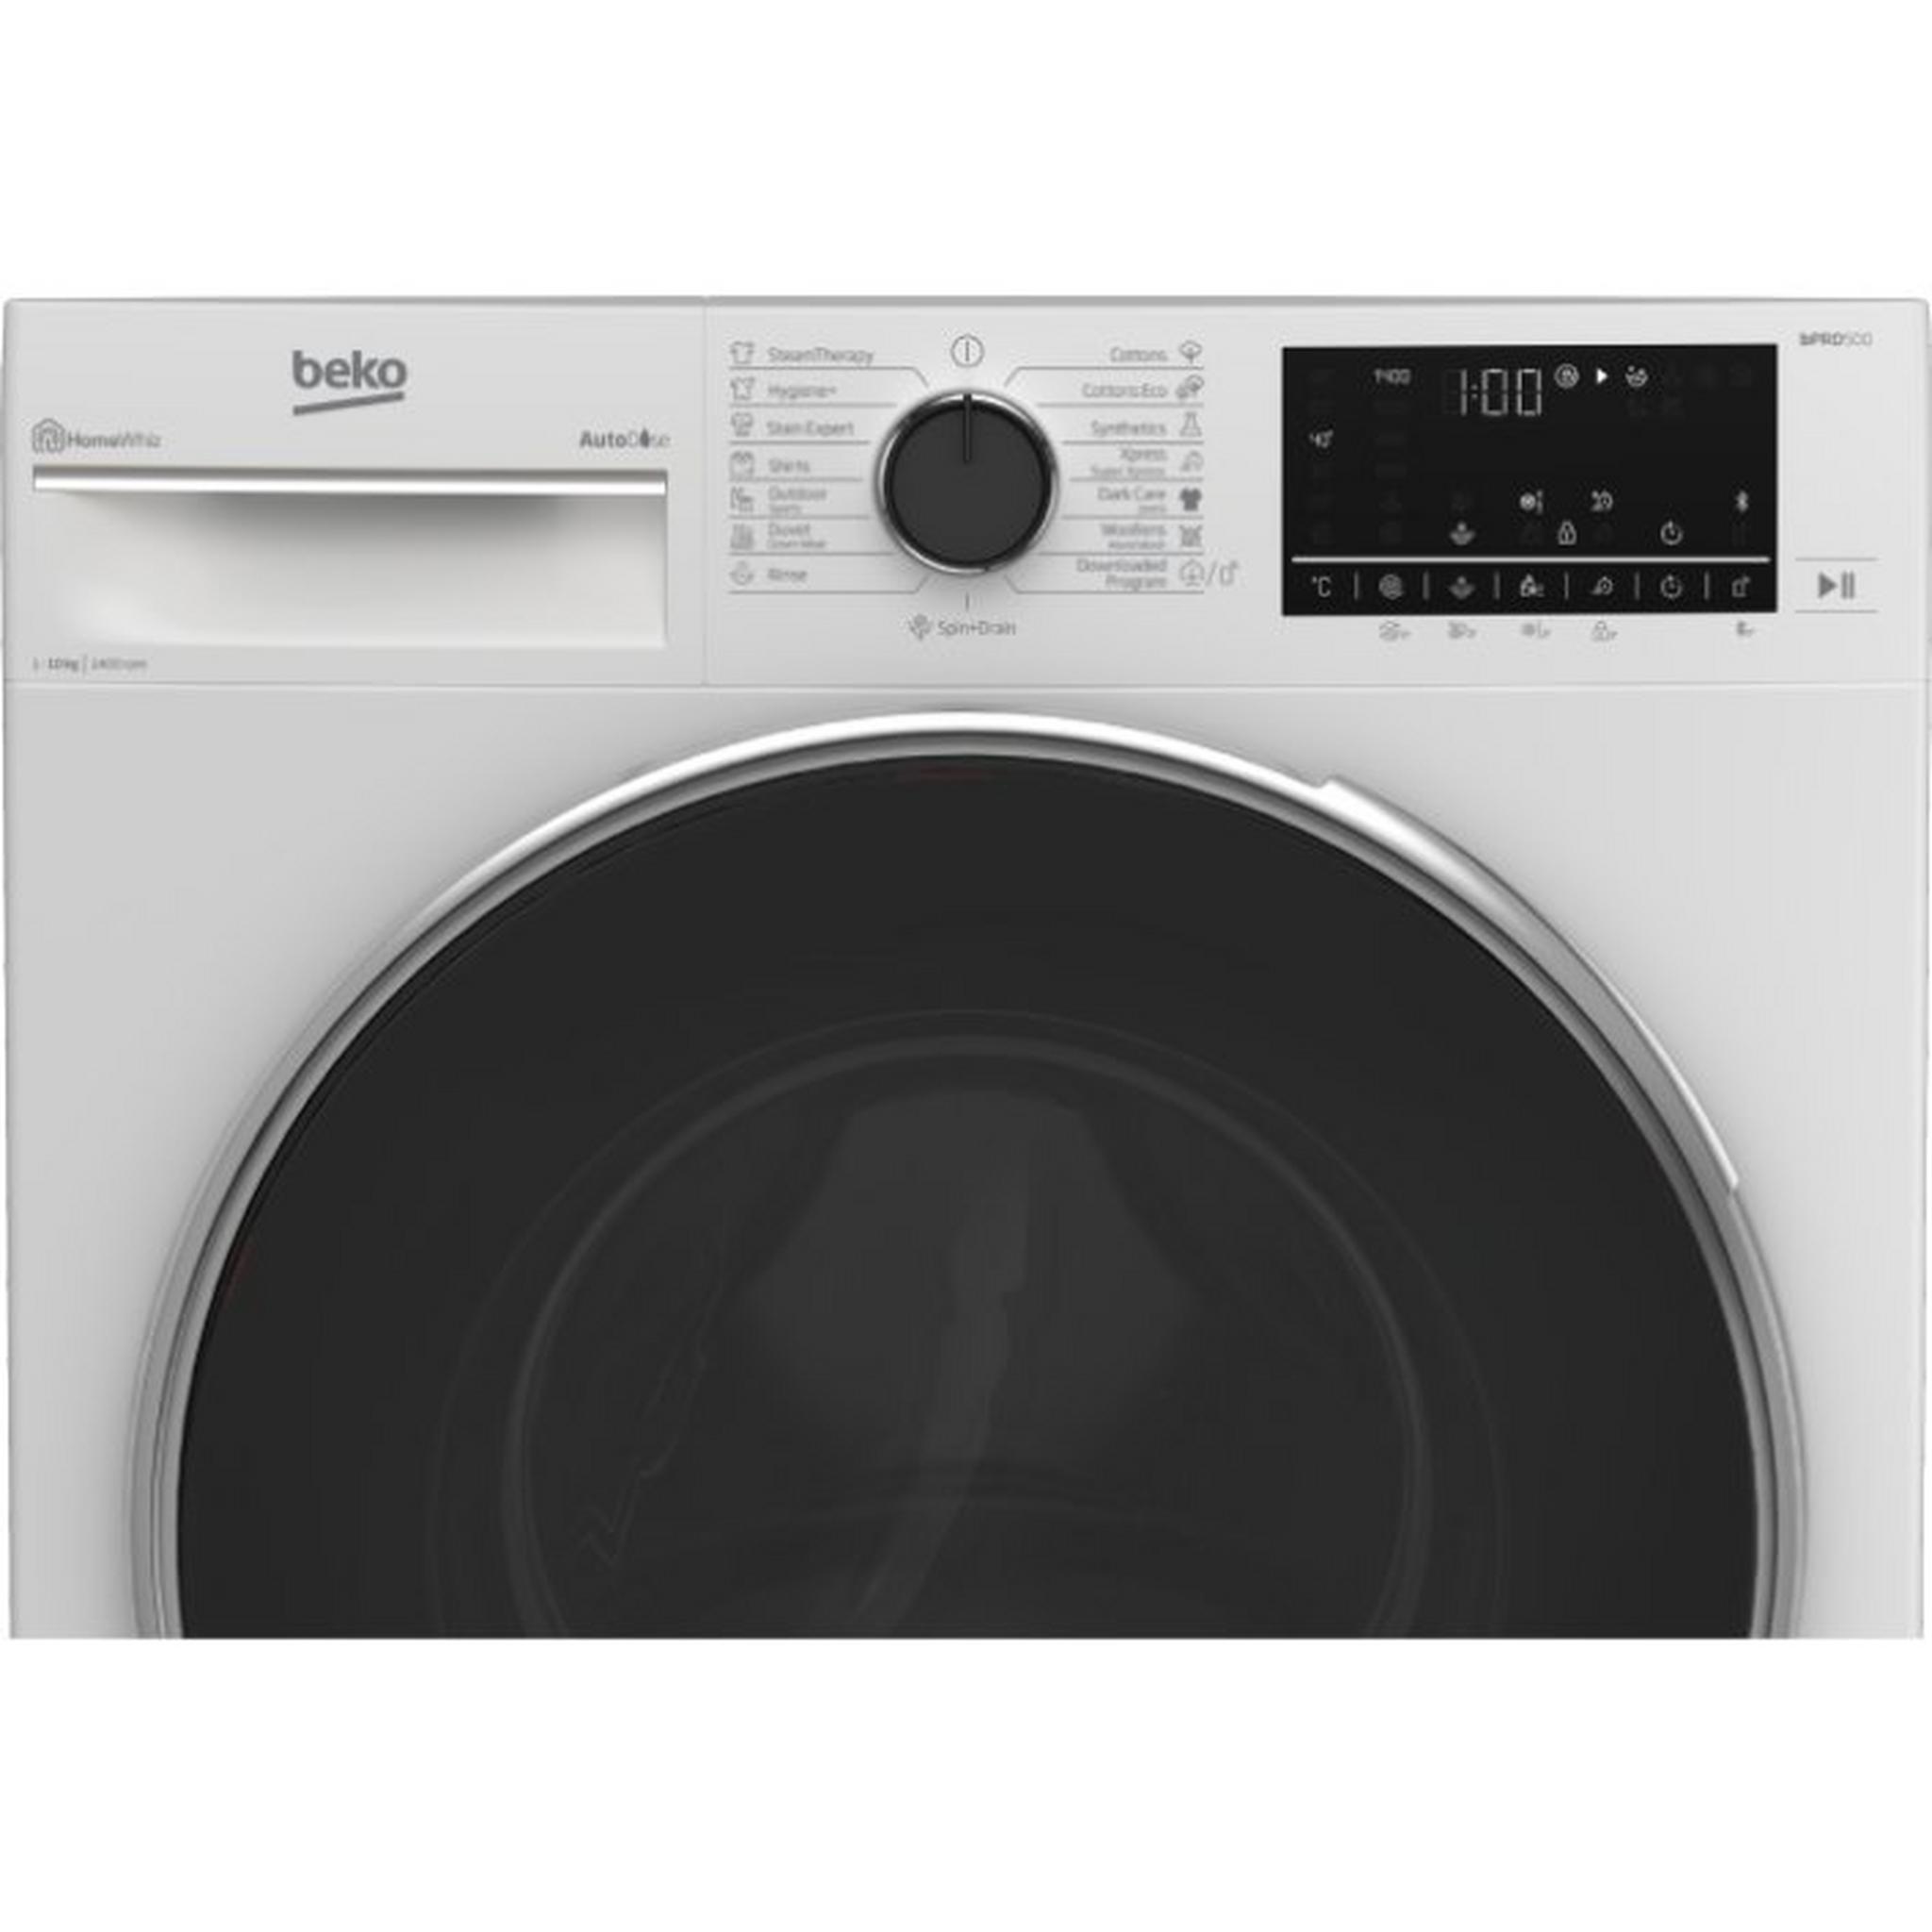 Beko Front Load Washer, 10Kg Washing Capacity, 1400RPM, WTE1014XW – White